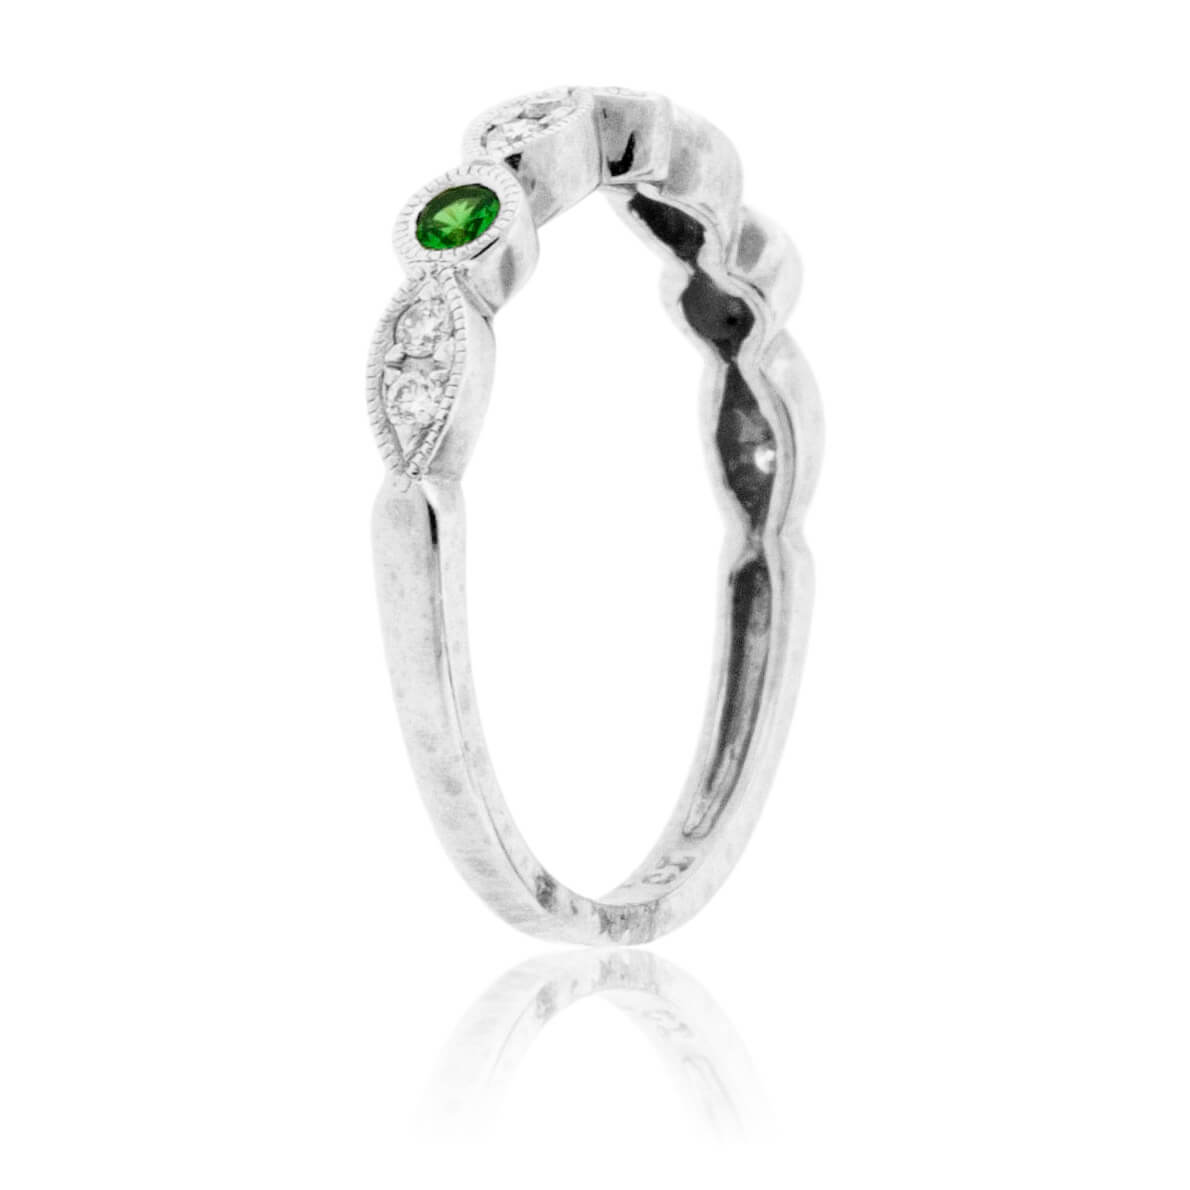 Green Tsavorite Garnet & Diamond Stackable Ring - Park City Jewelers